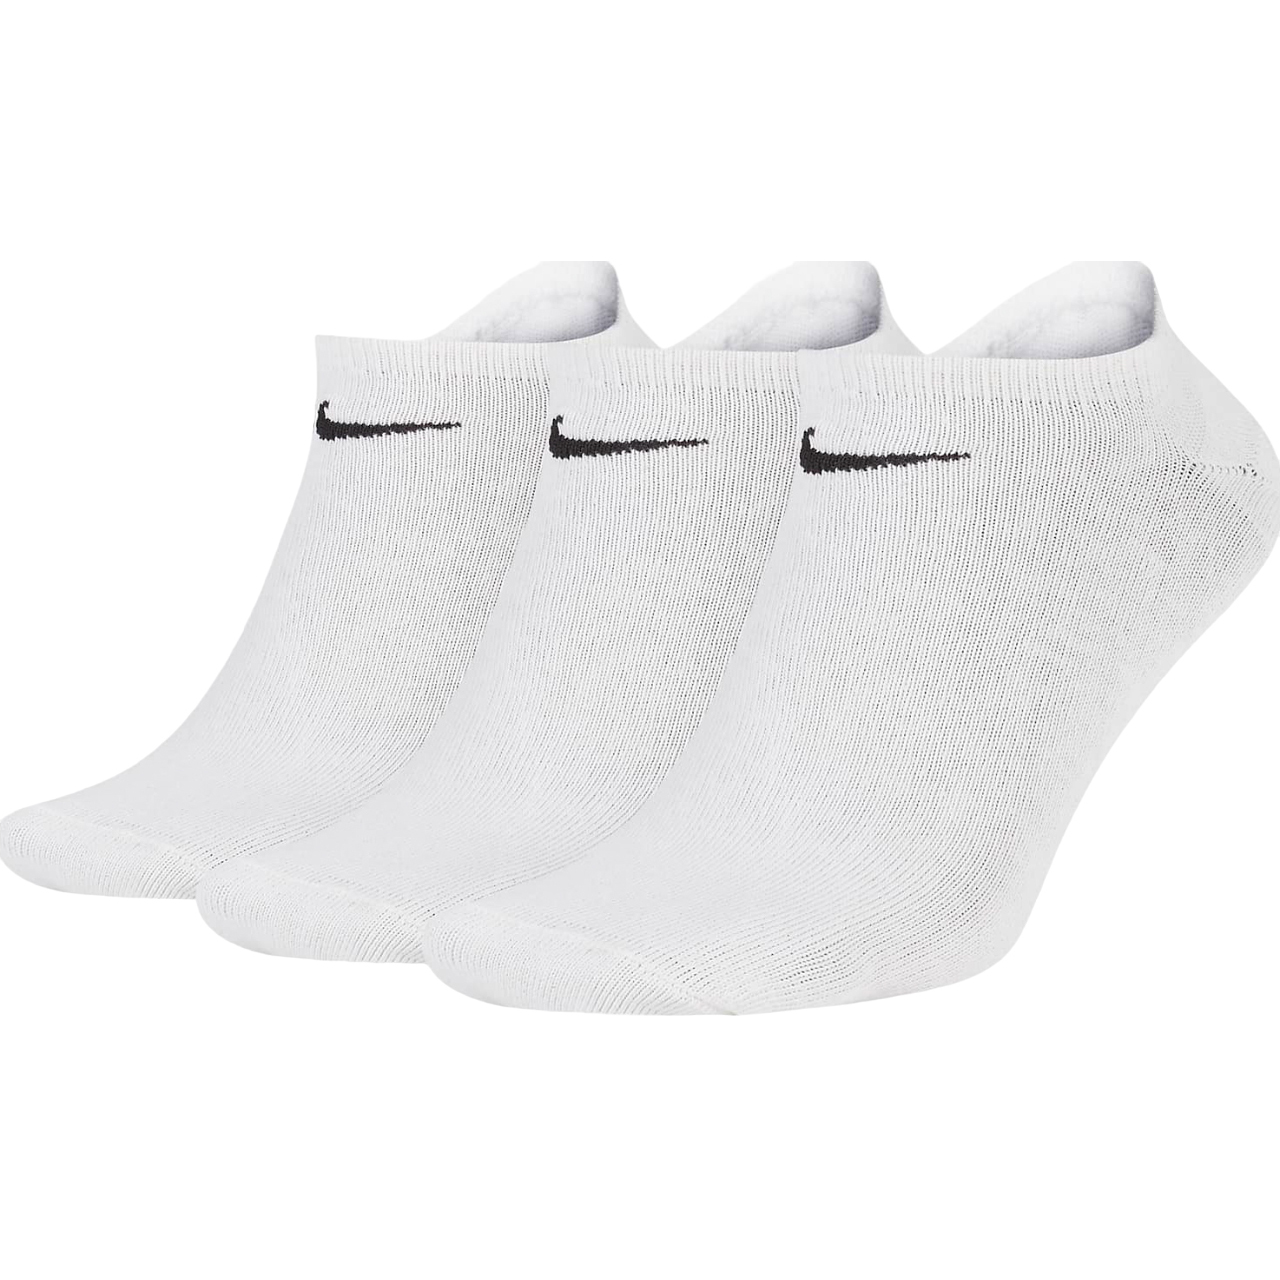 Набор носков Nike Lightweight SX2554-101 M 3 пары белые фото 1